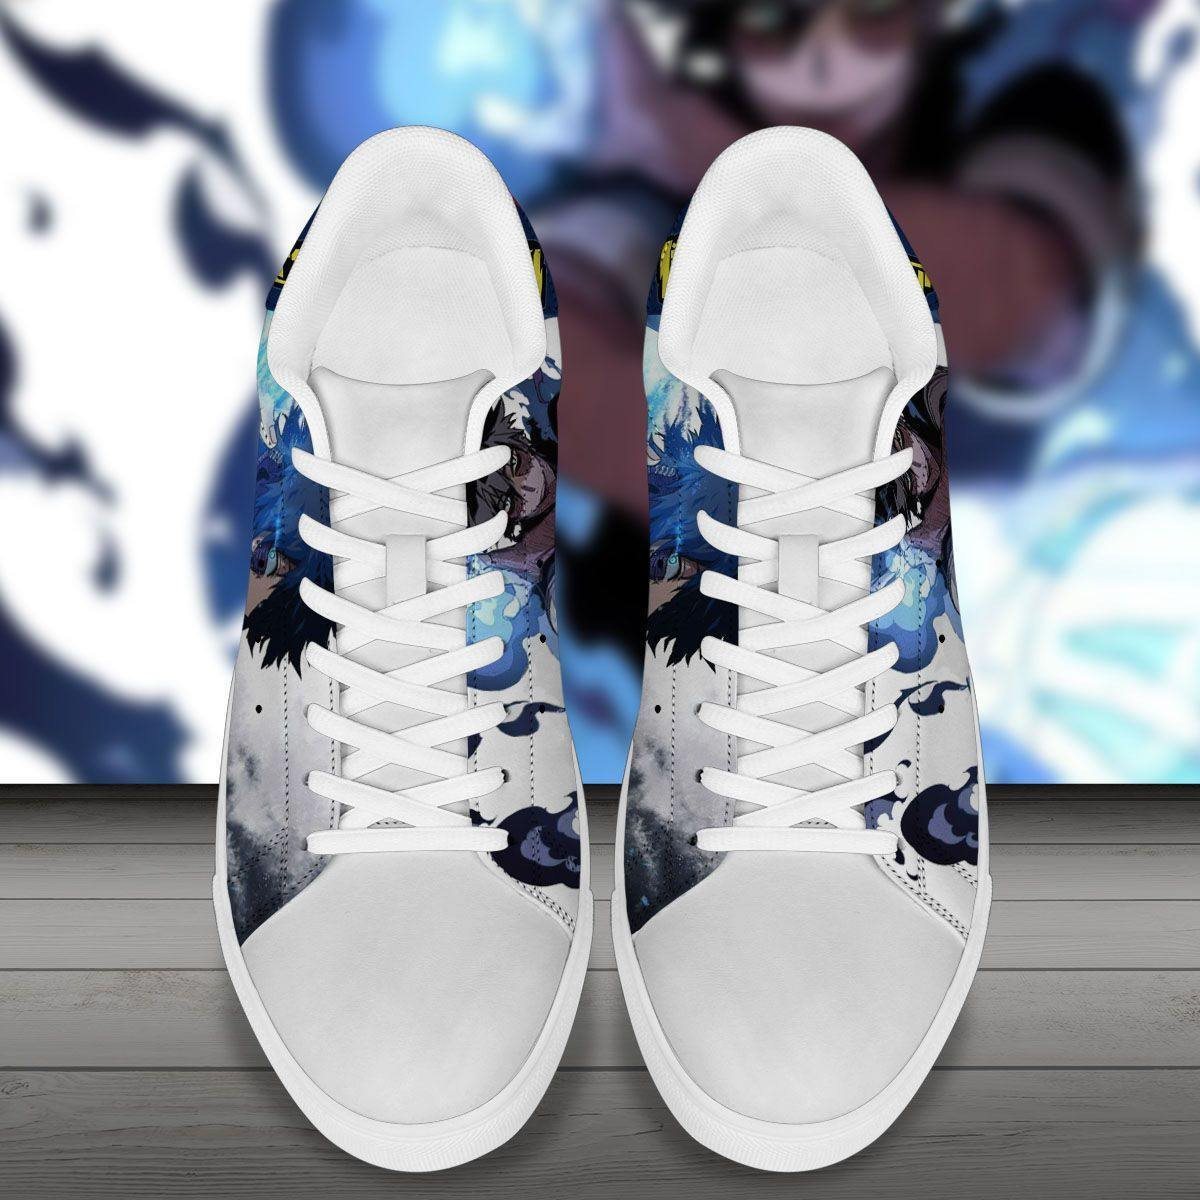 dabi skate sneakers custom mha anime shoes 2 rvafr7